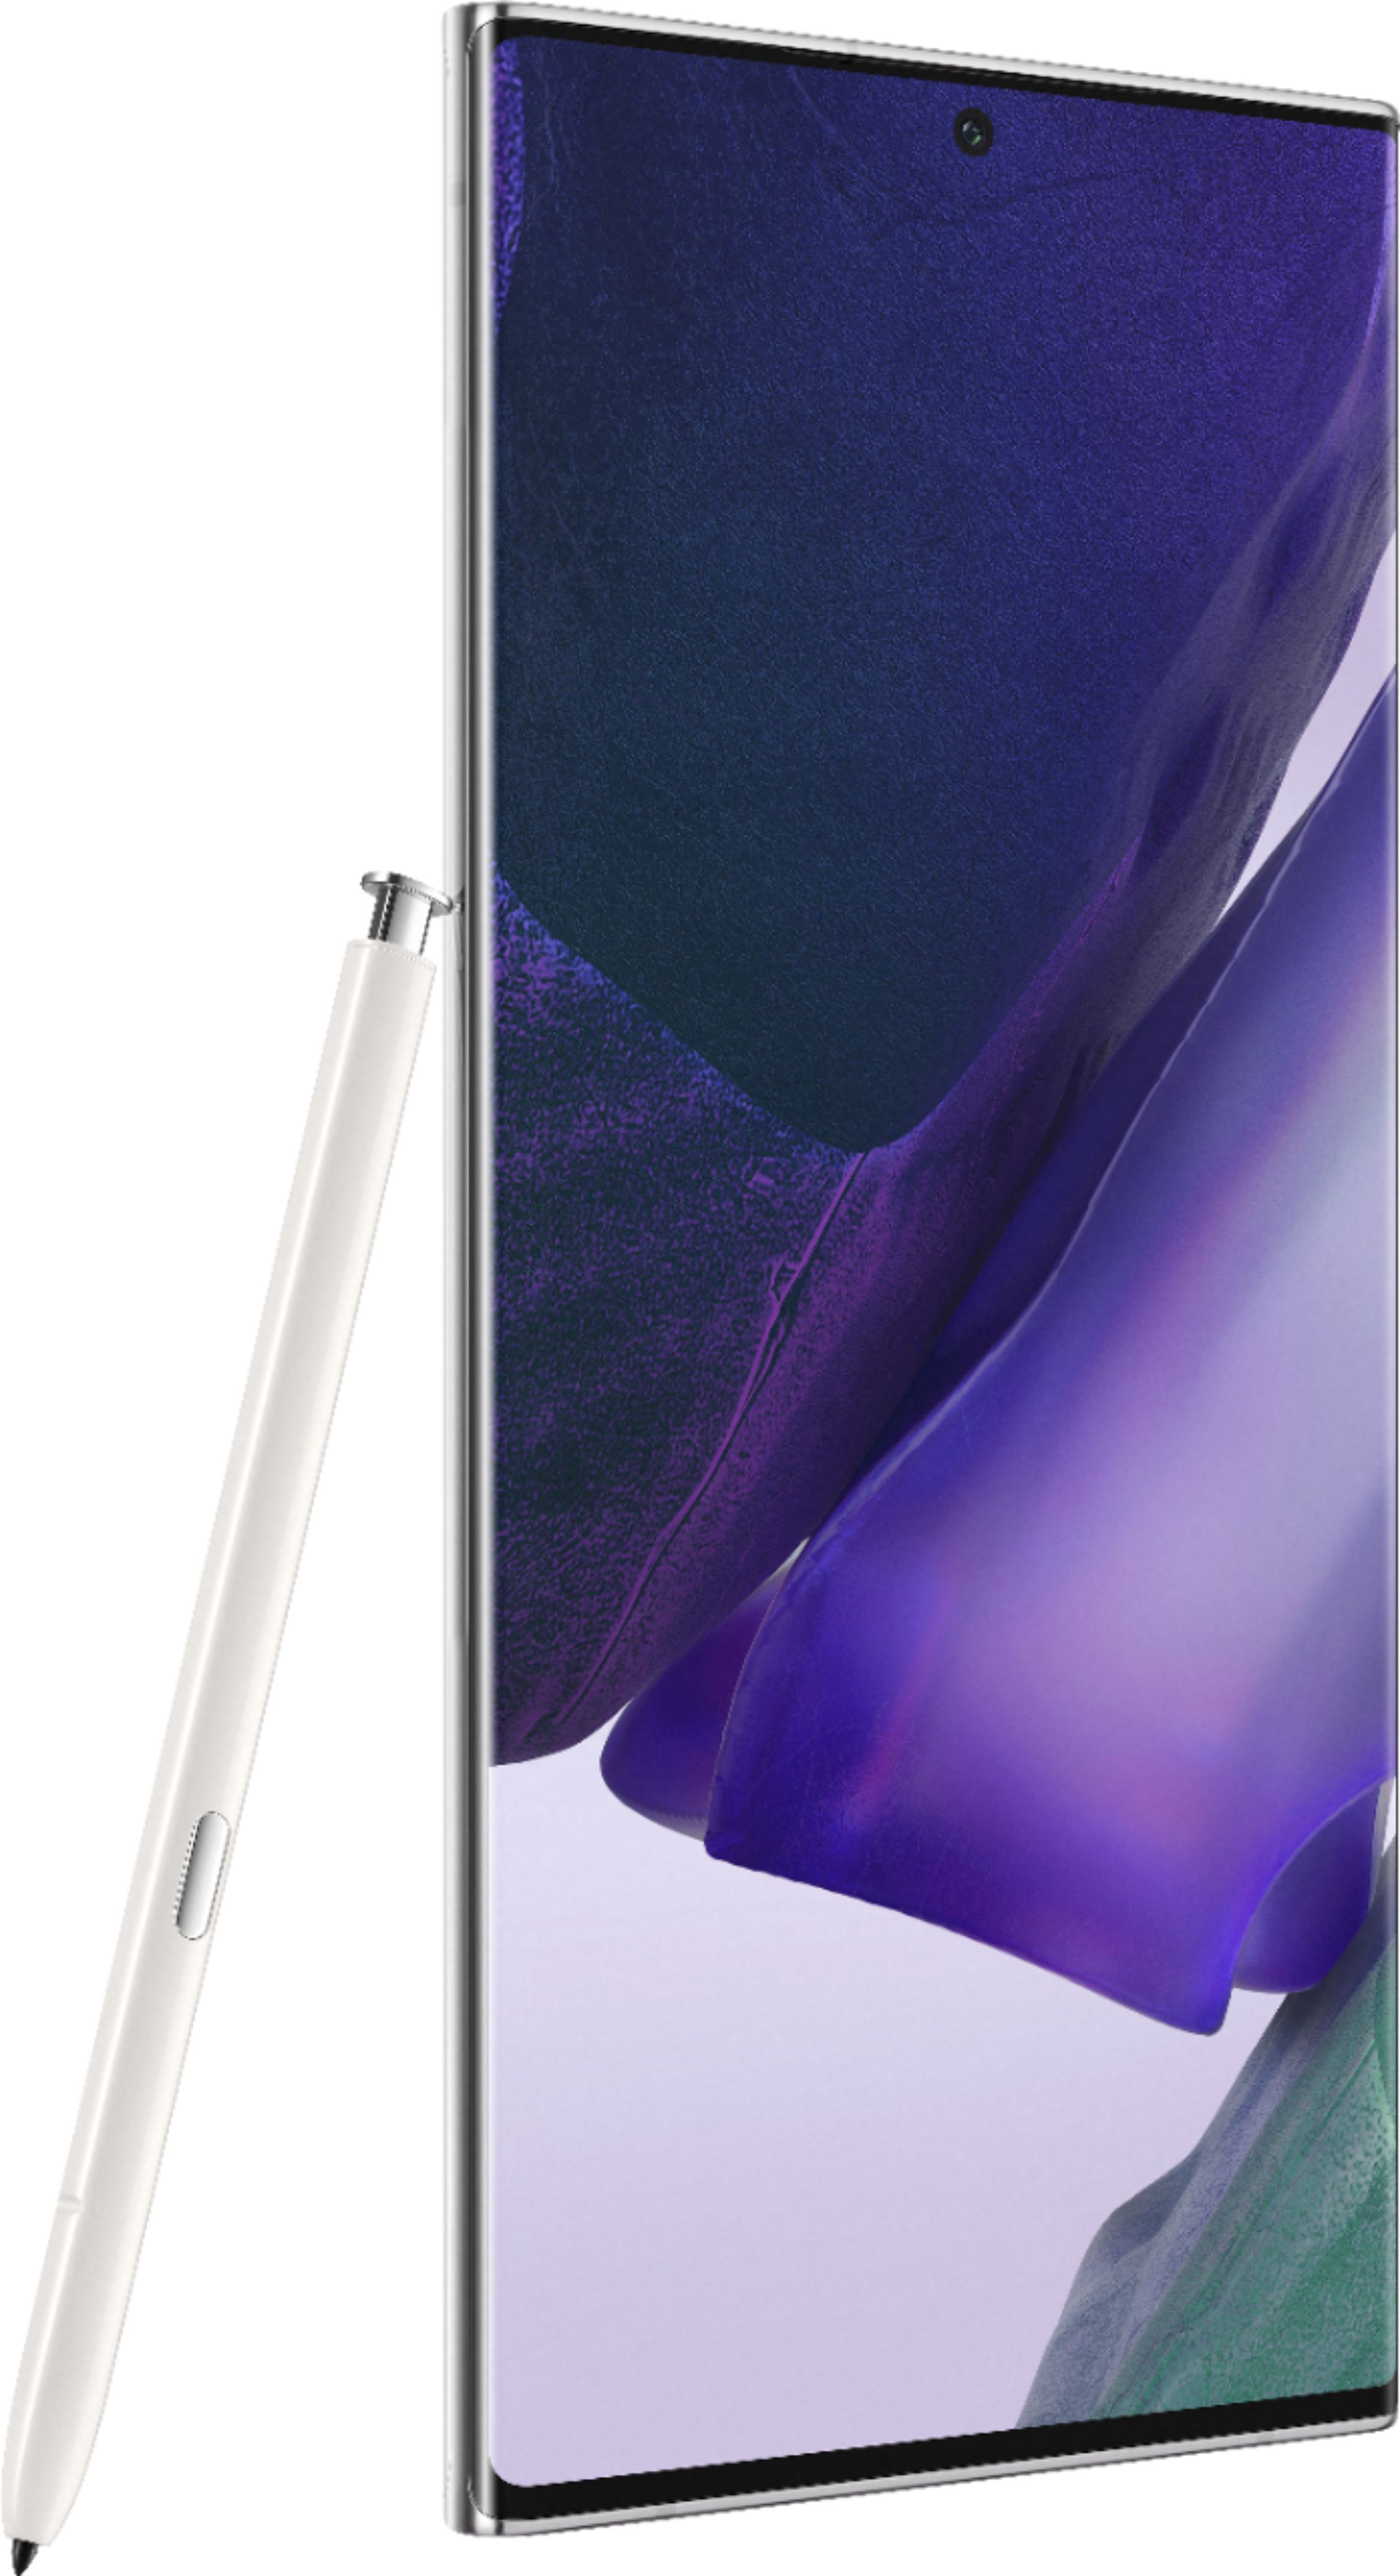 Angle View: Samsung - Geek Squad Certified Refurbished Galaxy S21 Ultra 5G 128GB (Unlocked) - Phantom Silver